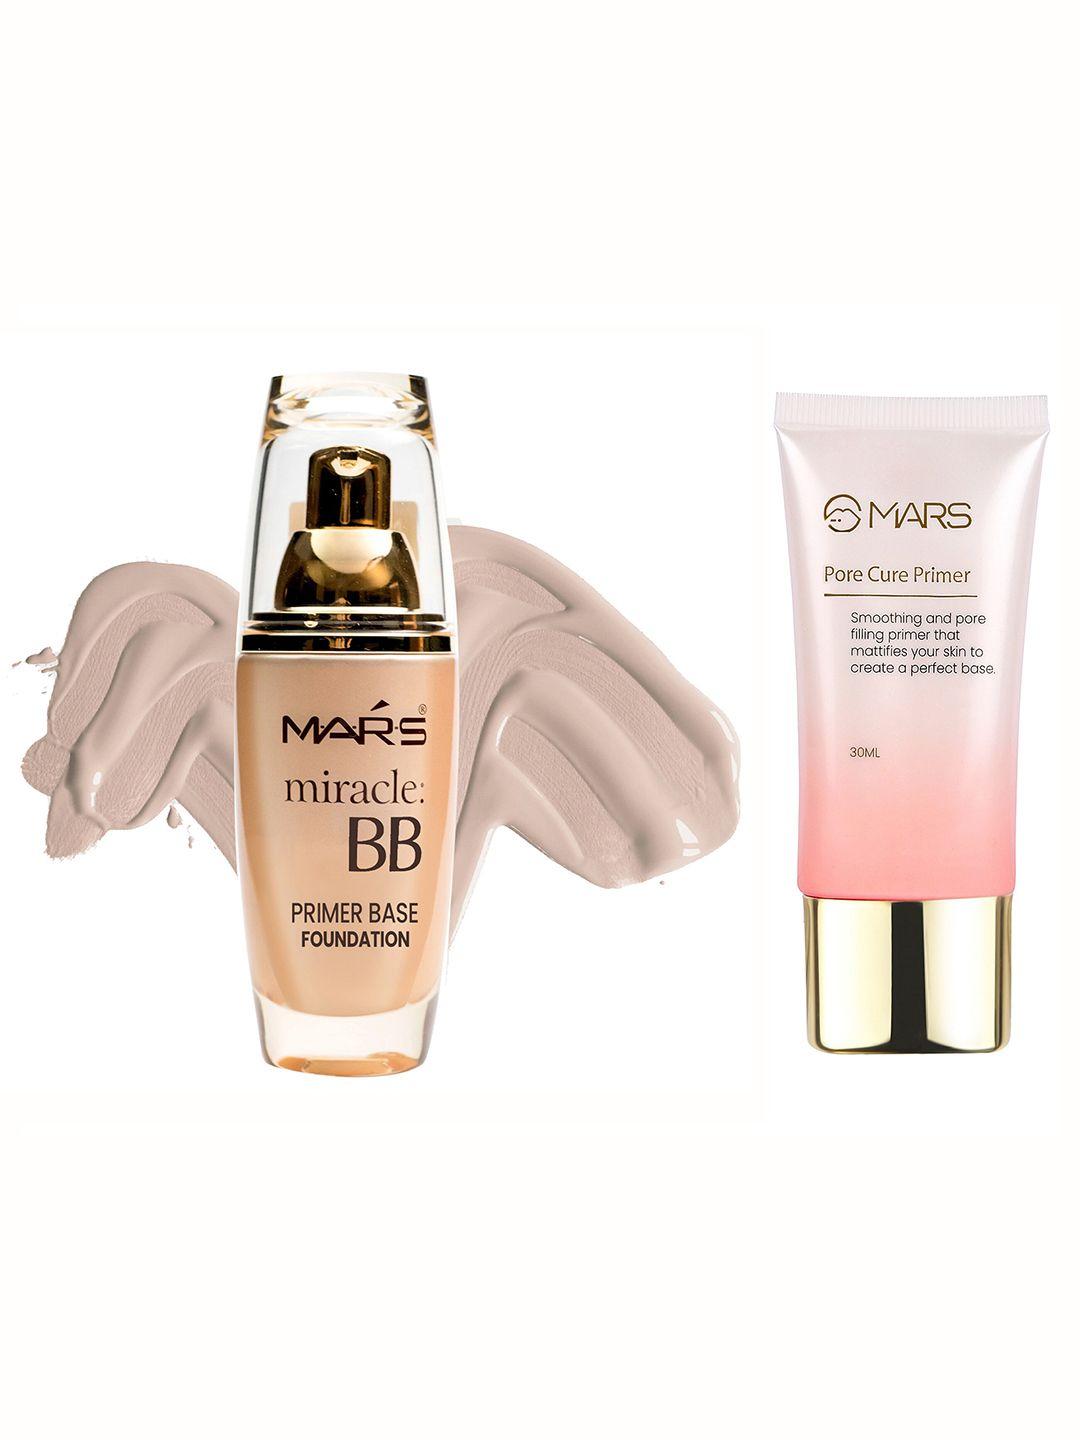 mars set of miracle bb primer base foundation - nude beige 60 ml + pore cure primer 30 ml